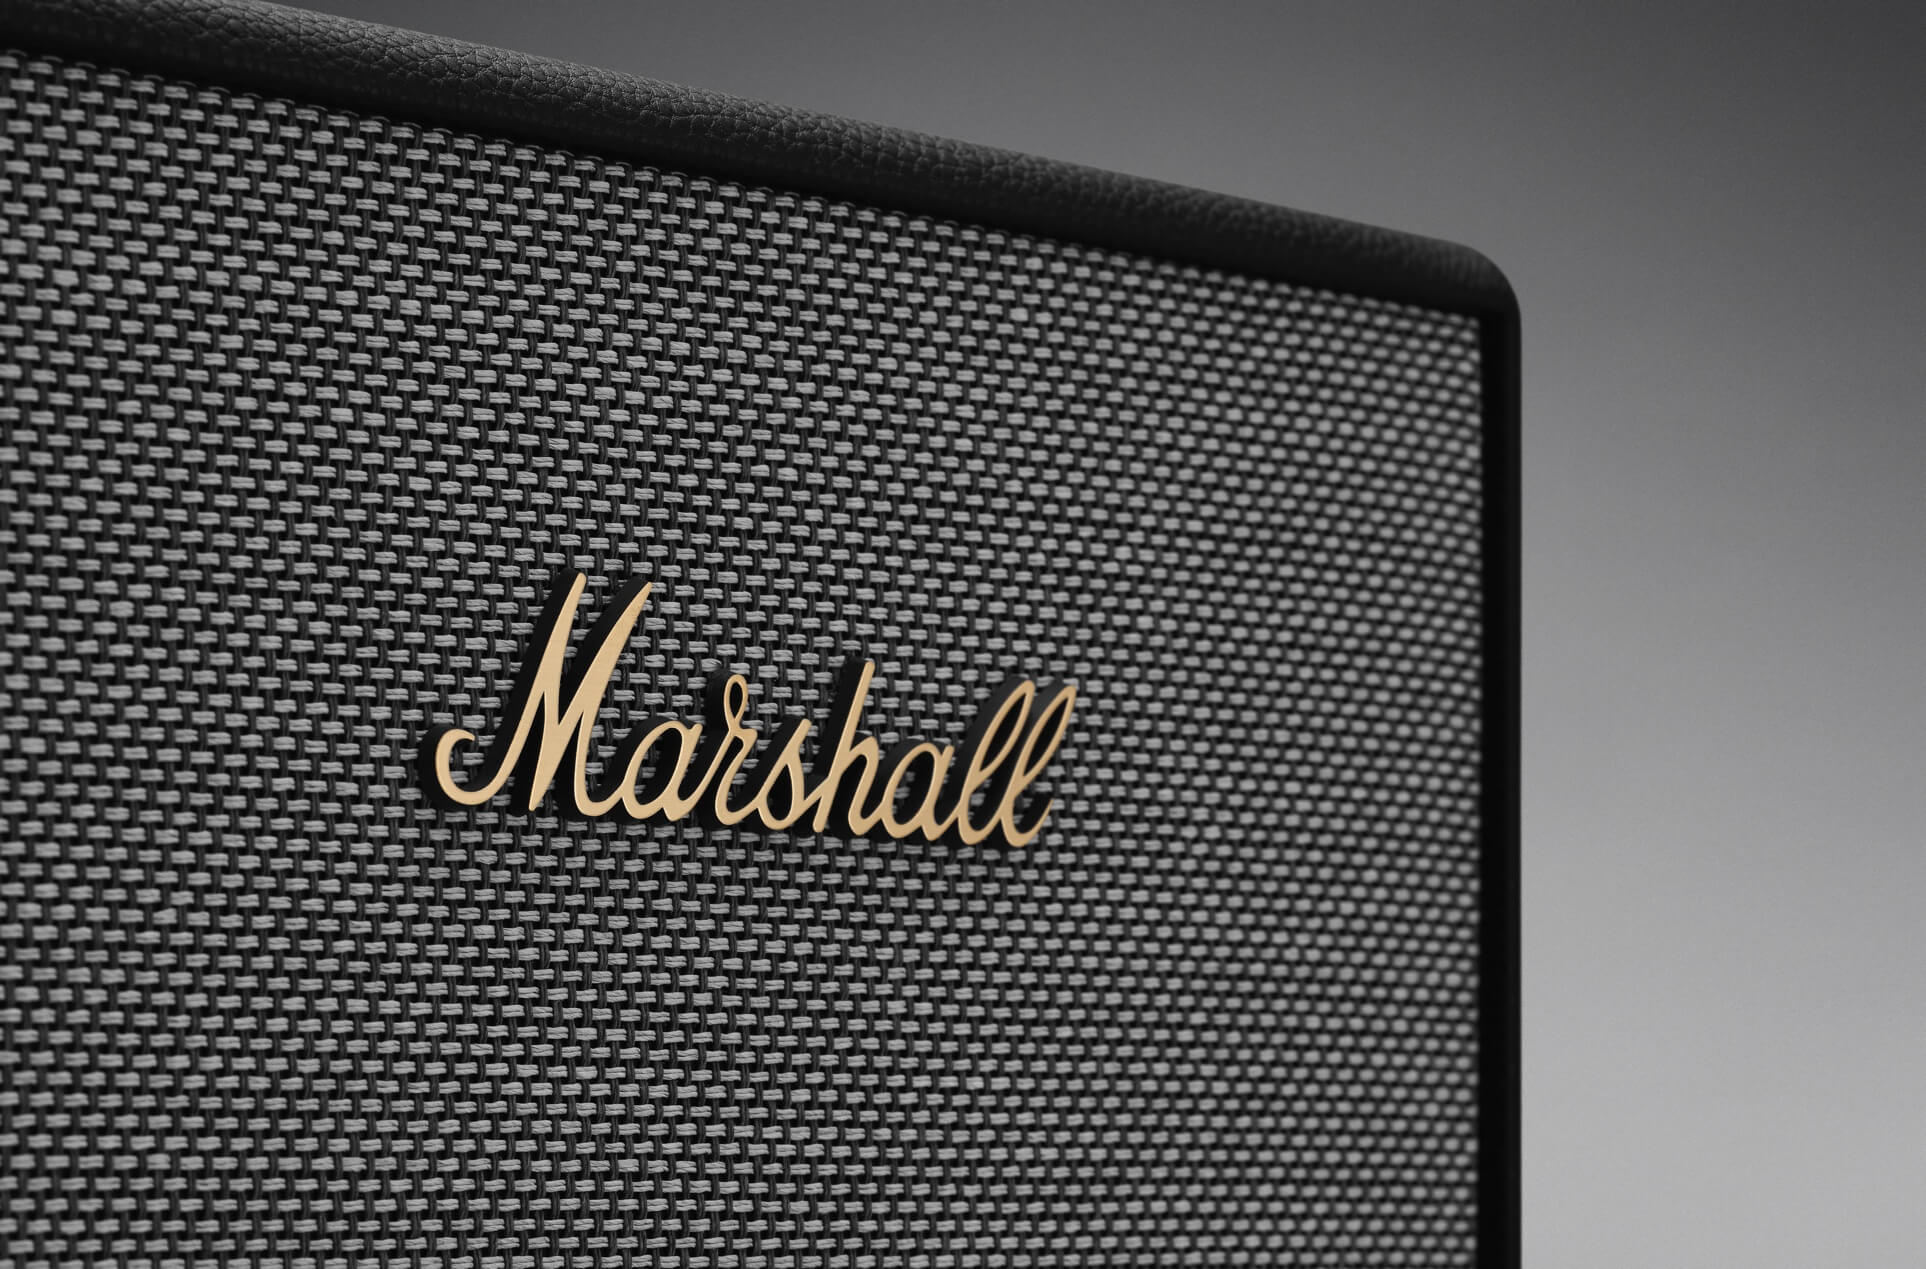 Marshall Stanmore II Bluetooth Speaker - MSL Digital Online Store